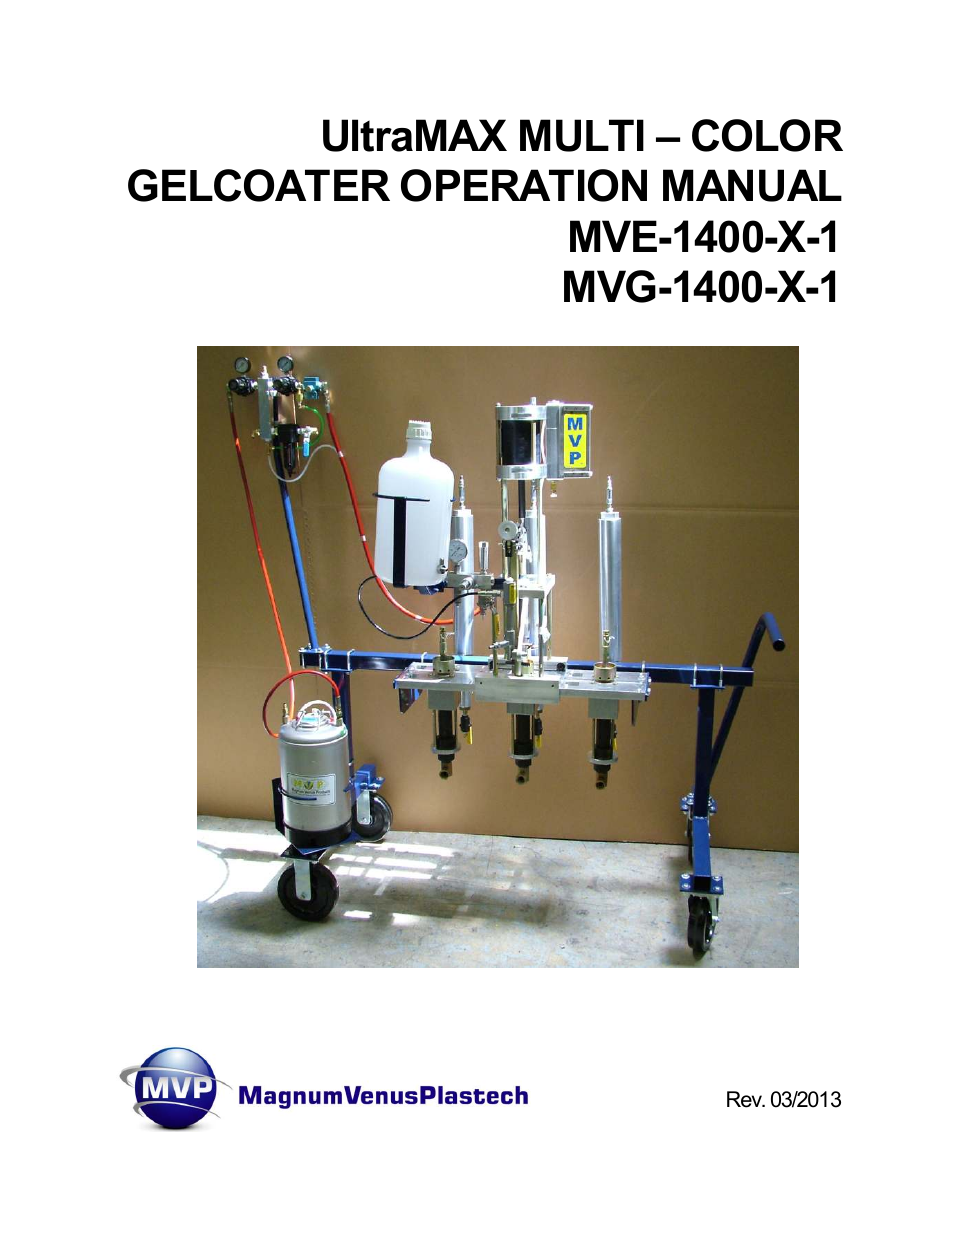 UltraMAX MULTI–COLOR GELCOATER MVG-1400-X-1